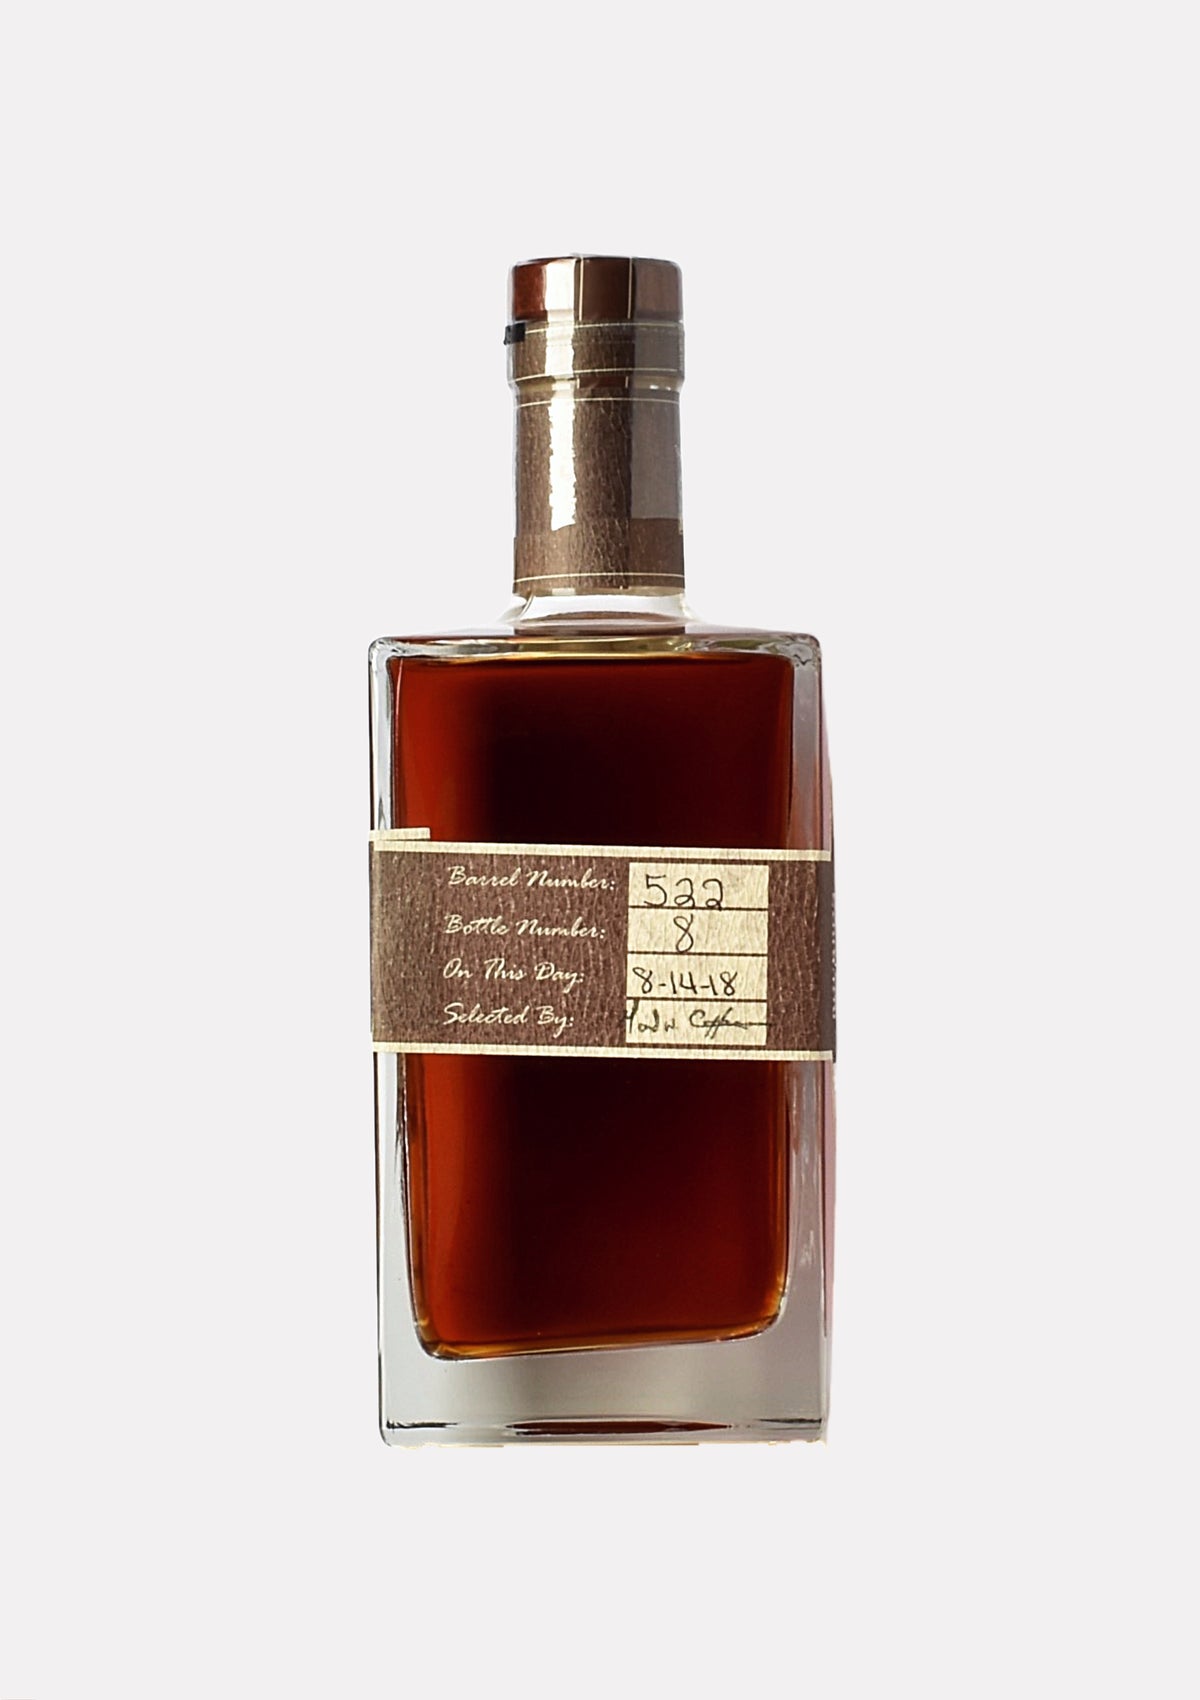 Town Branch Single Barrel Kentucky Straight Bourbon Whiskey 117.8 Proof